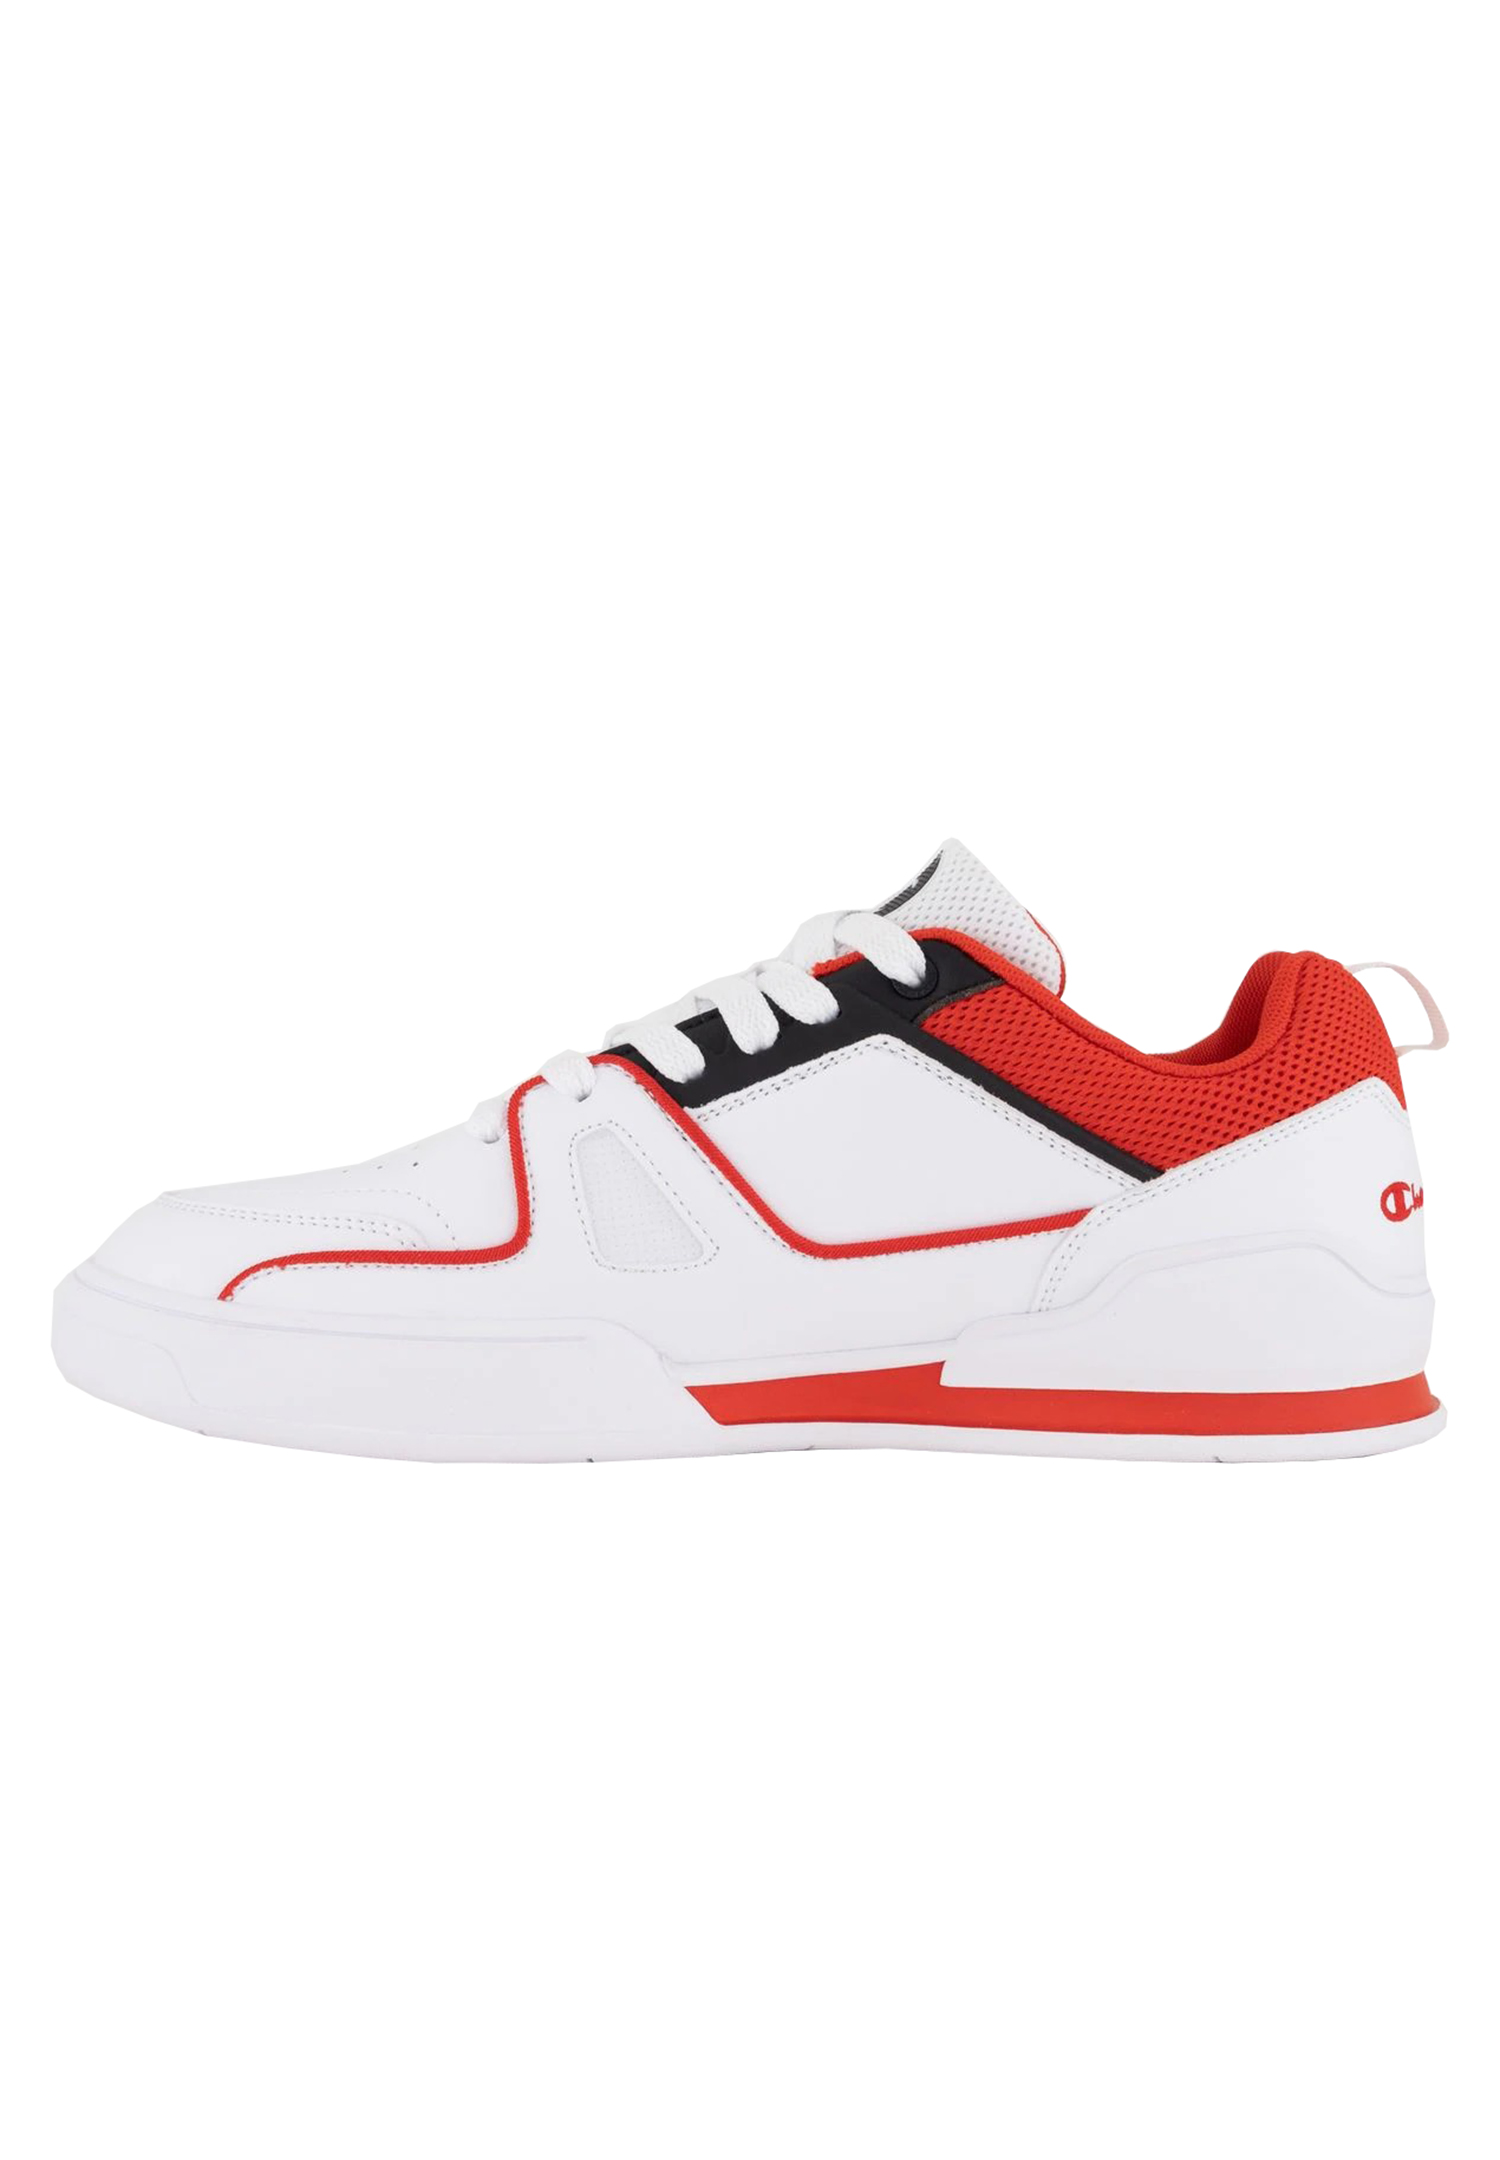 Champion 3 Point Low Herren Sneaker S21882-CHA-WW006 weiß/schwarz/rot